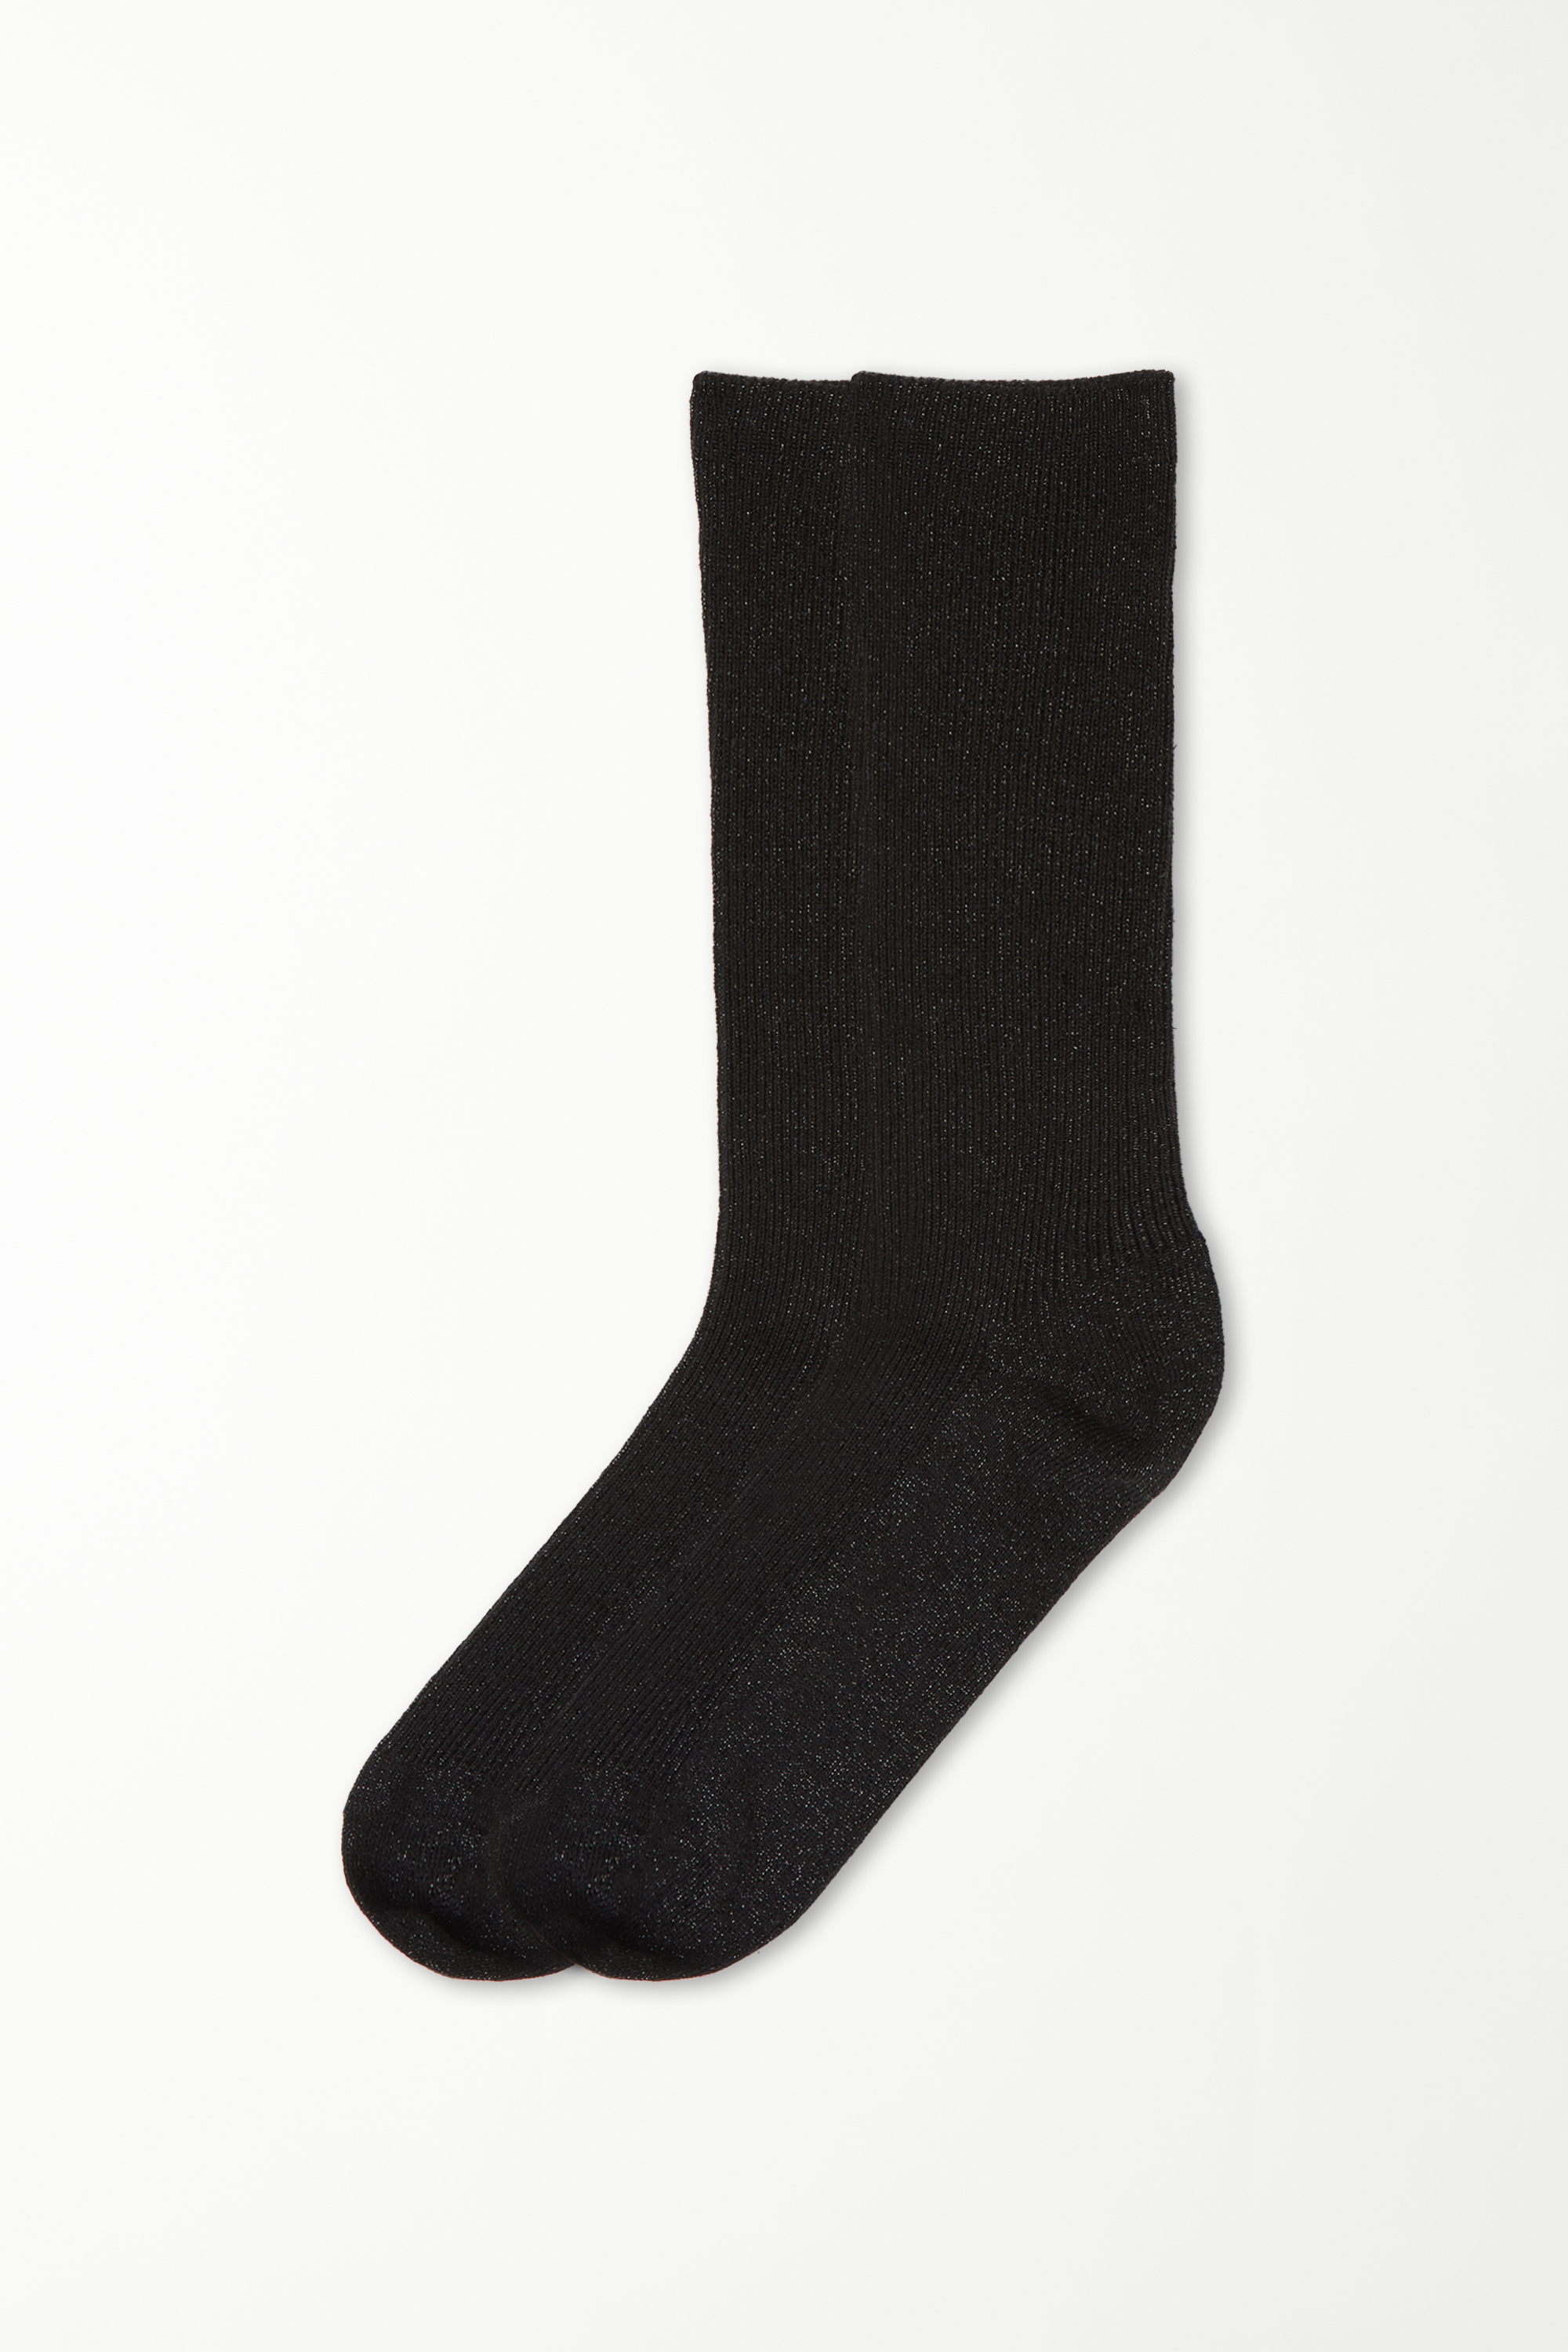 3/4 Length Laminated Ribbed Socks